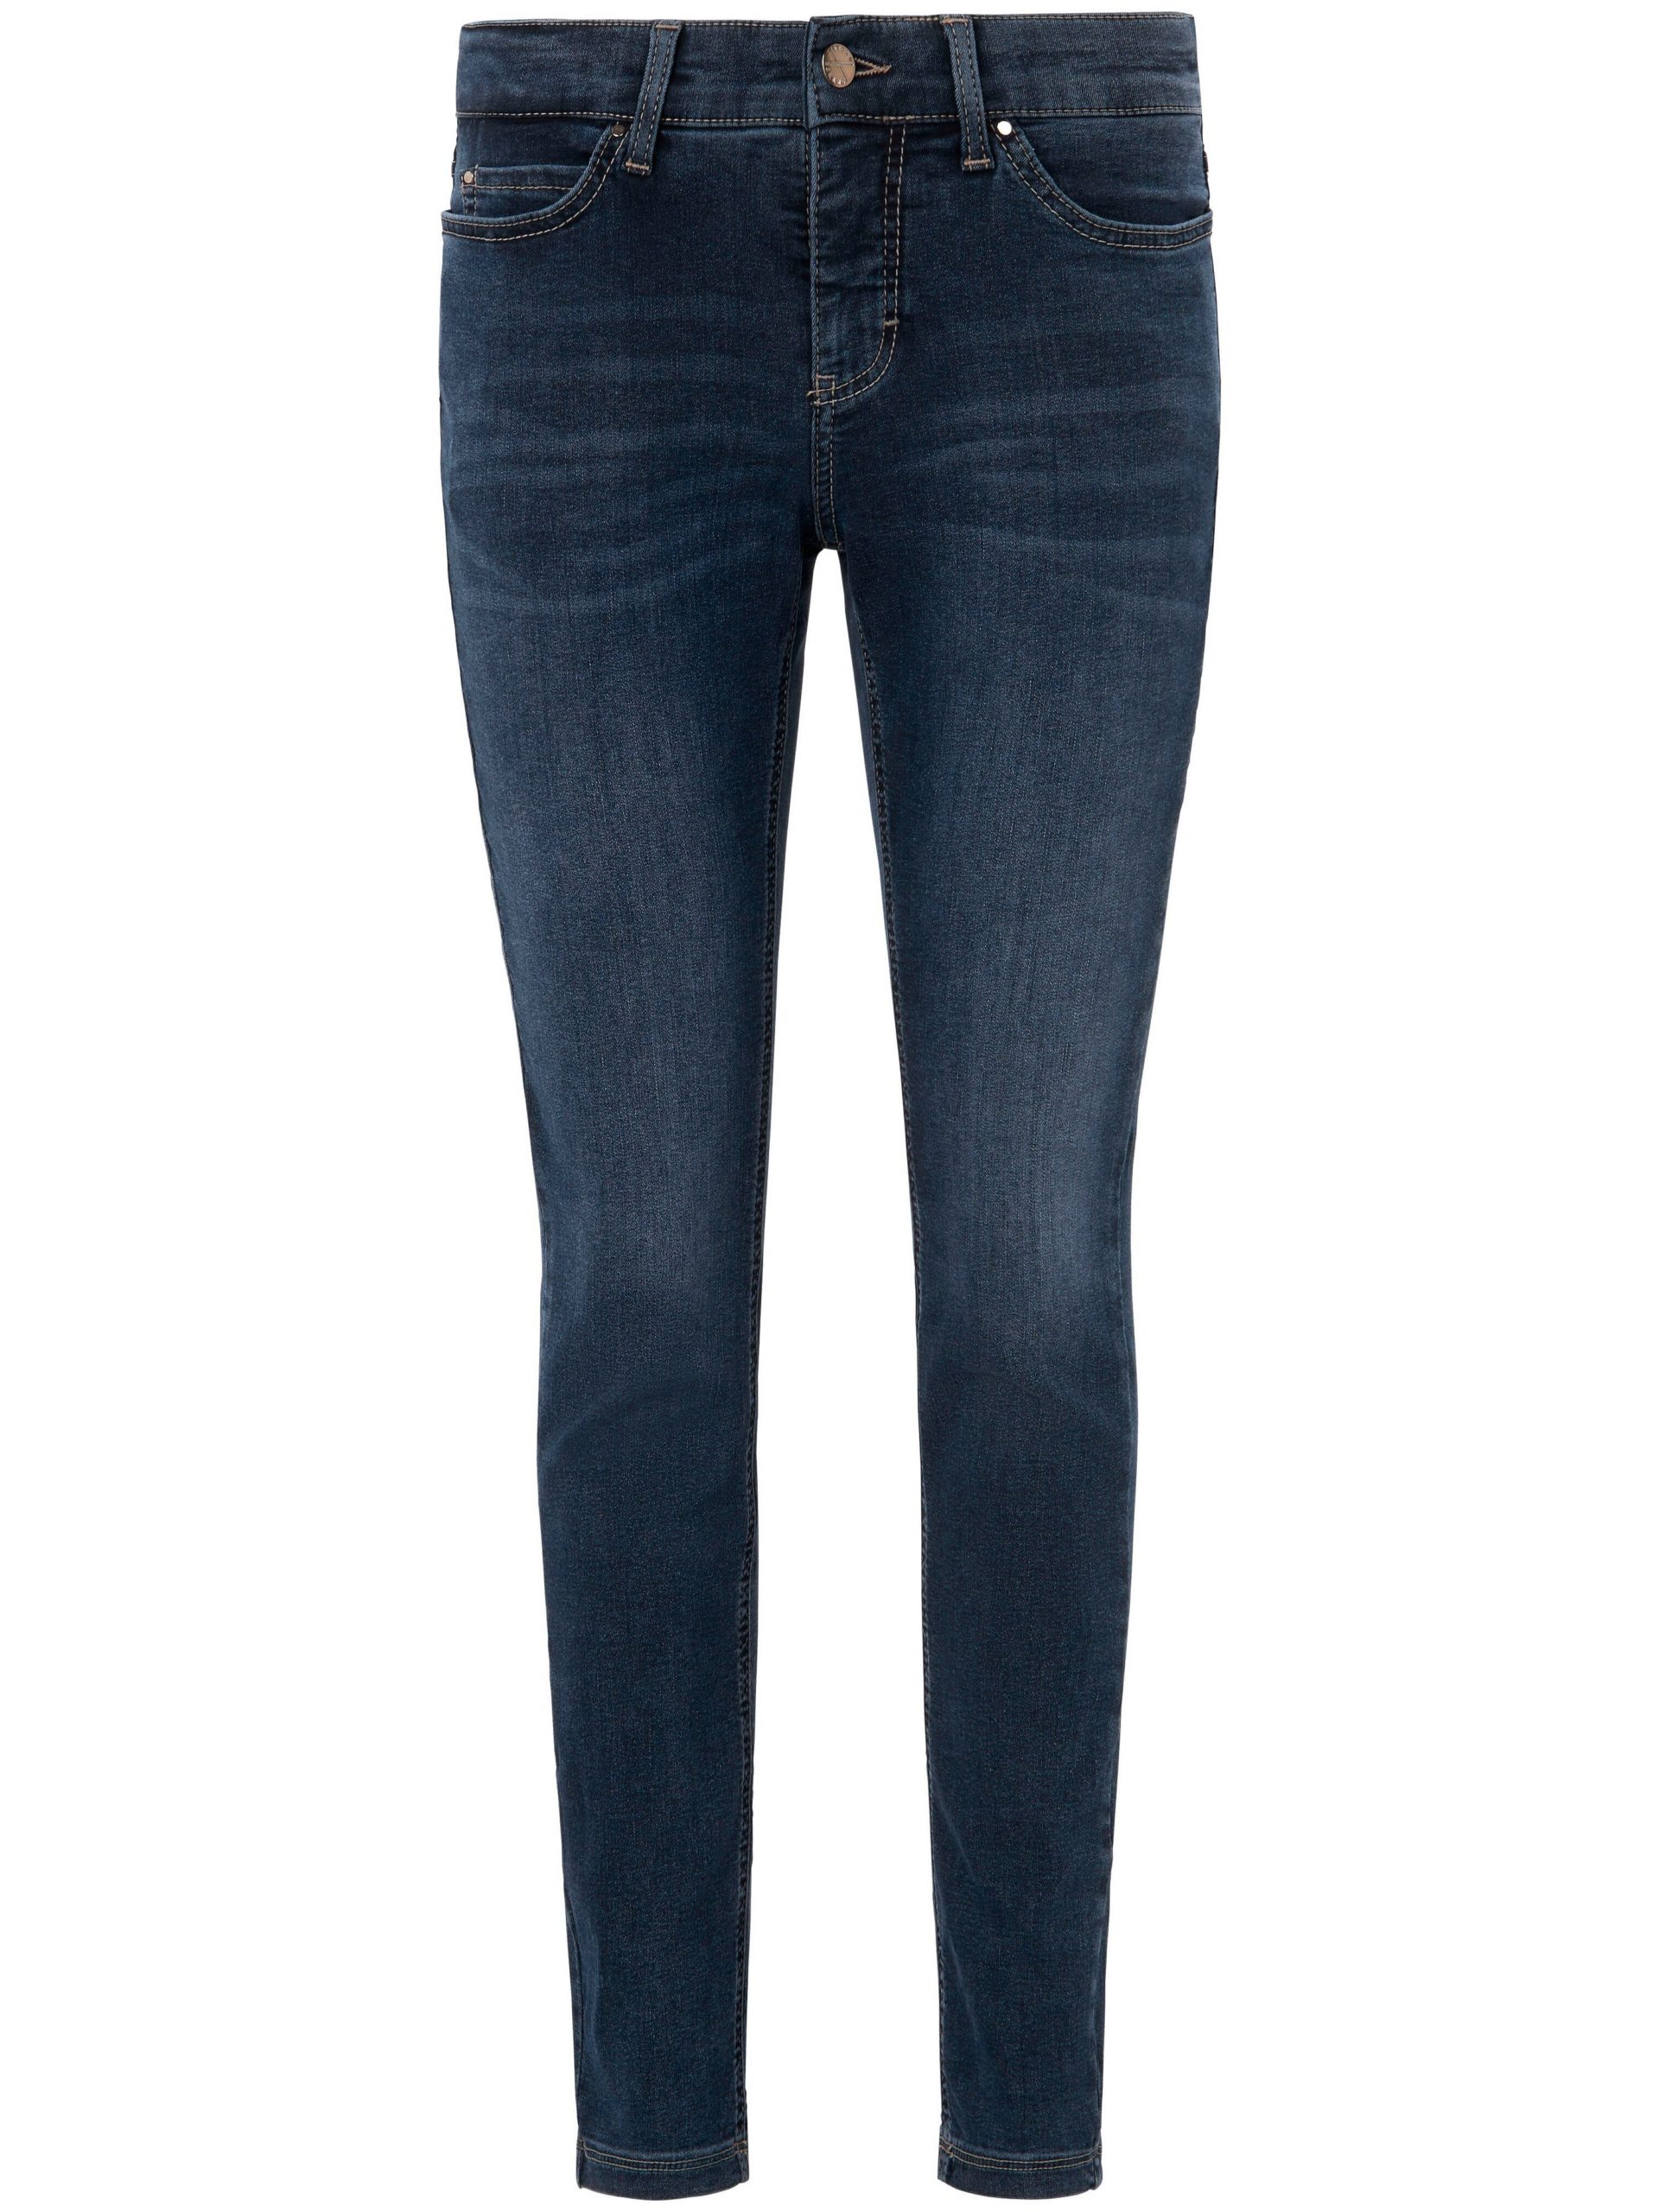 Jeans, model Dream Skinny, lengte 28 inch Van Mac denim Kopen